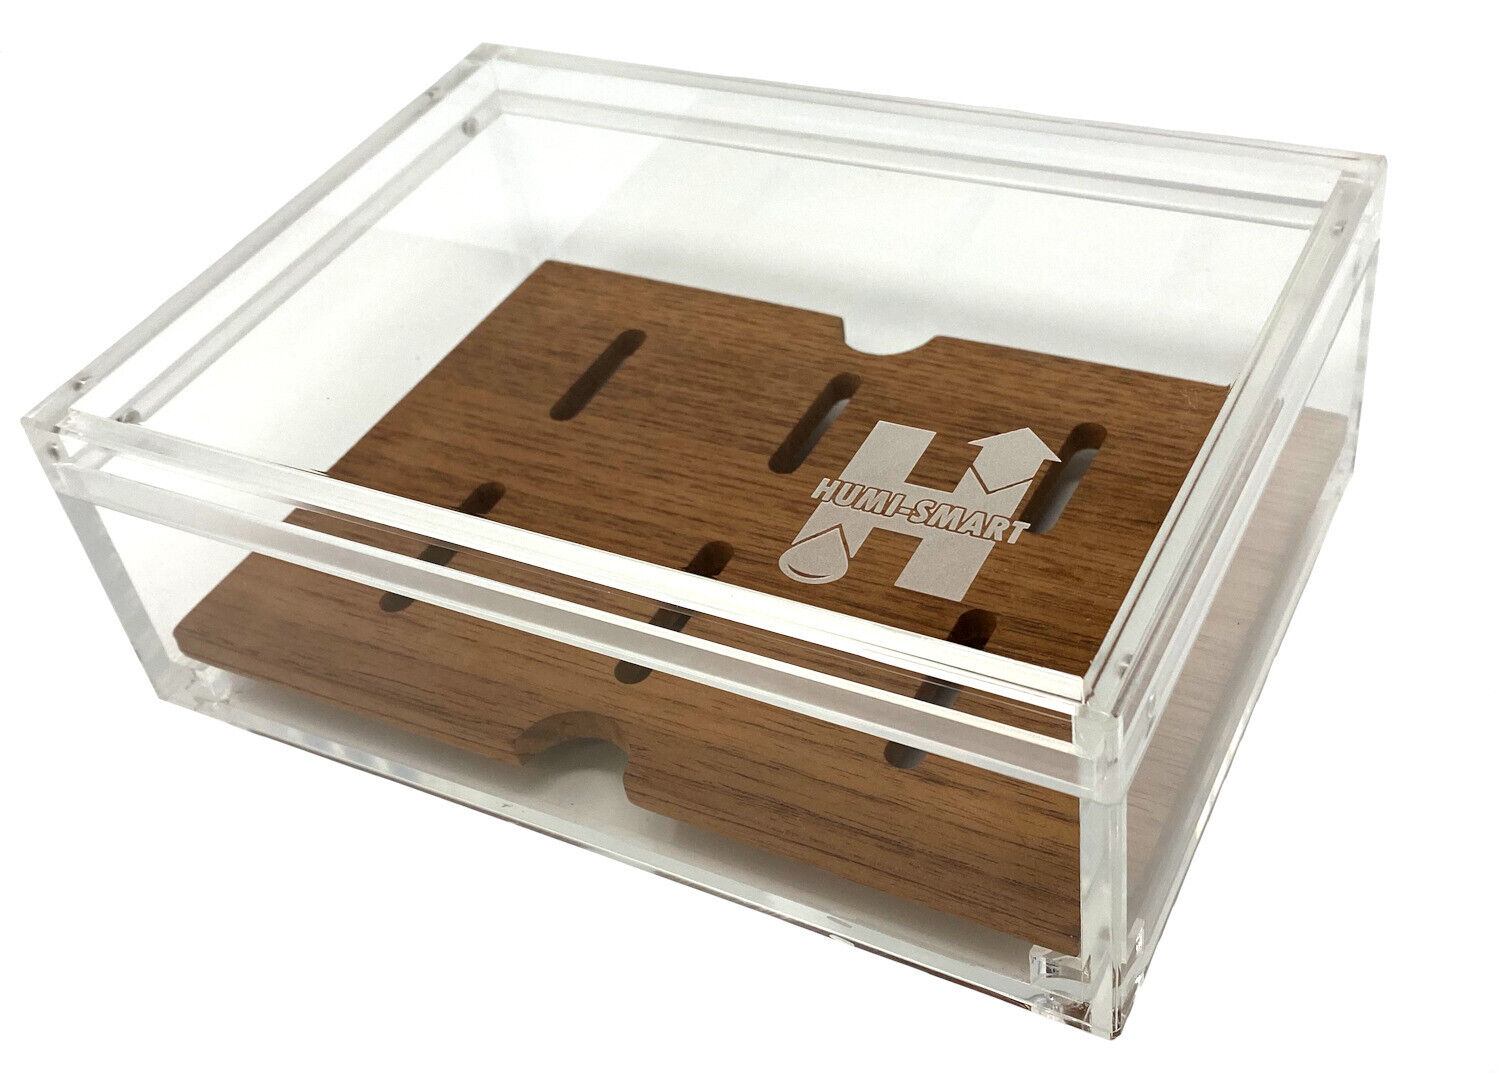 HUMI-SMART Acrylic Air Tight Desktop Cigar Humidor